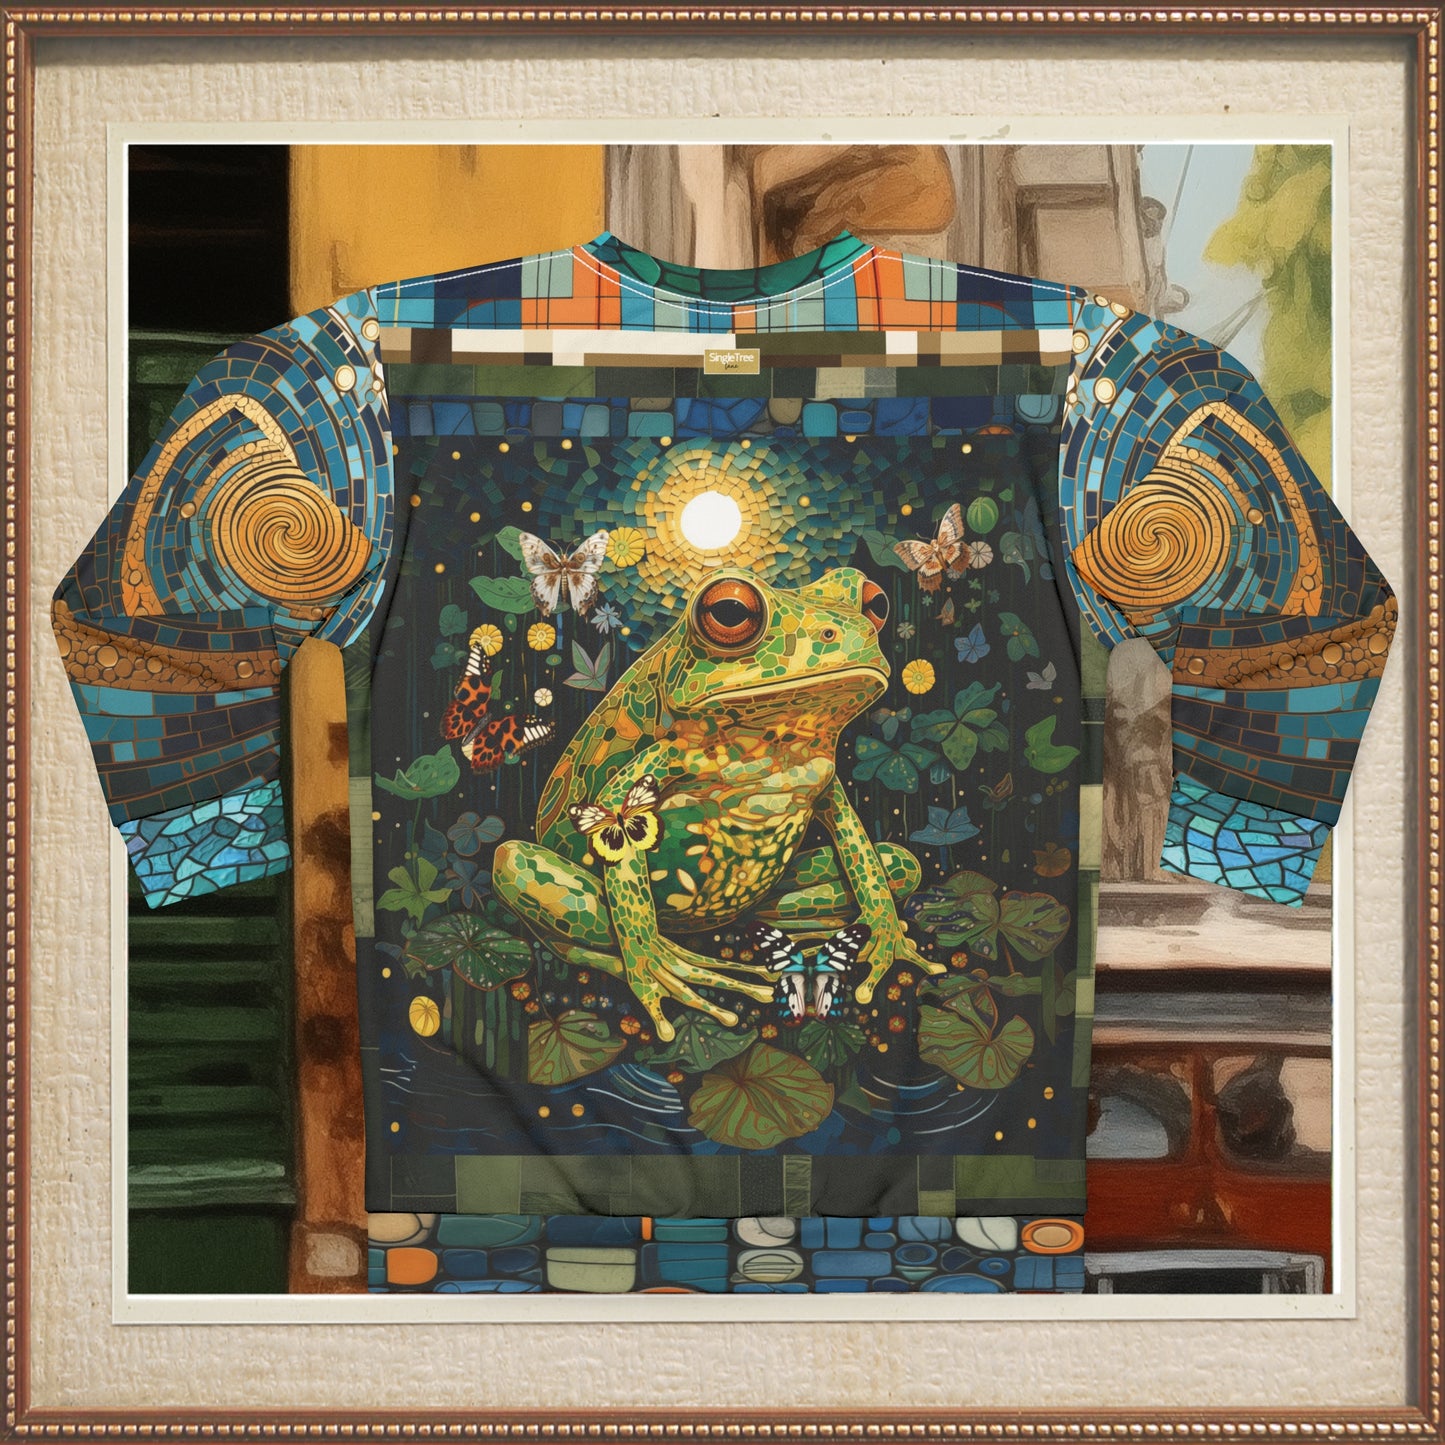 Super Jolly Green Leap Frog Mosaic Print Unisex Sweatshirt